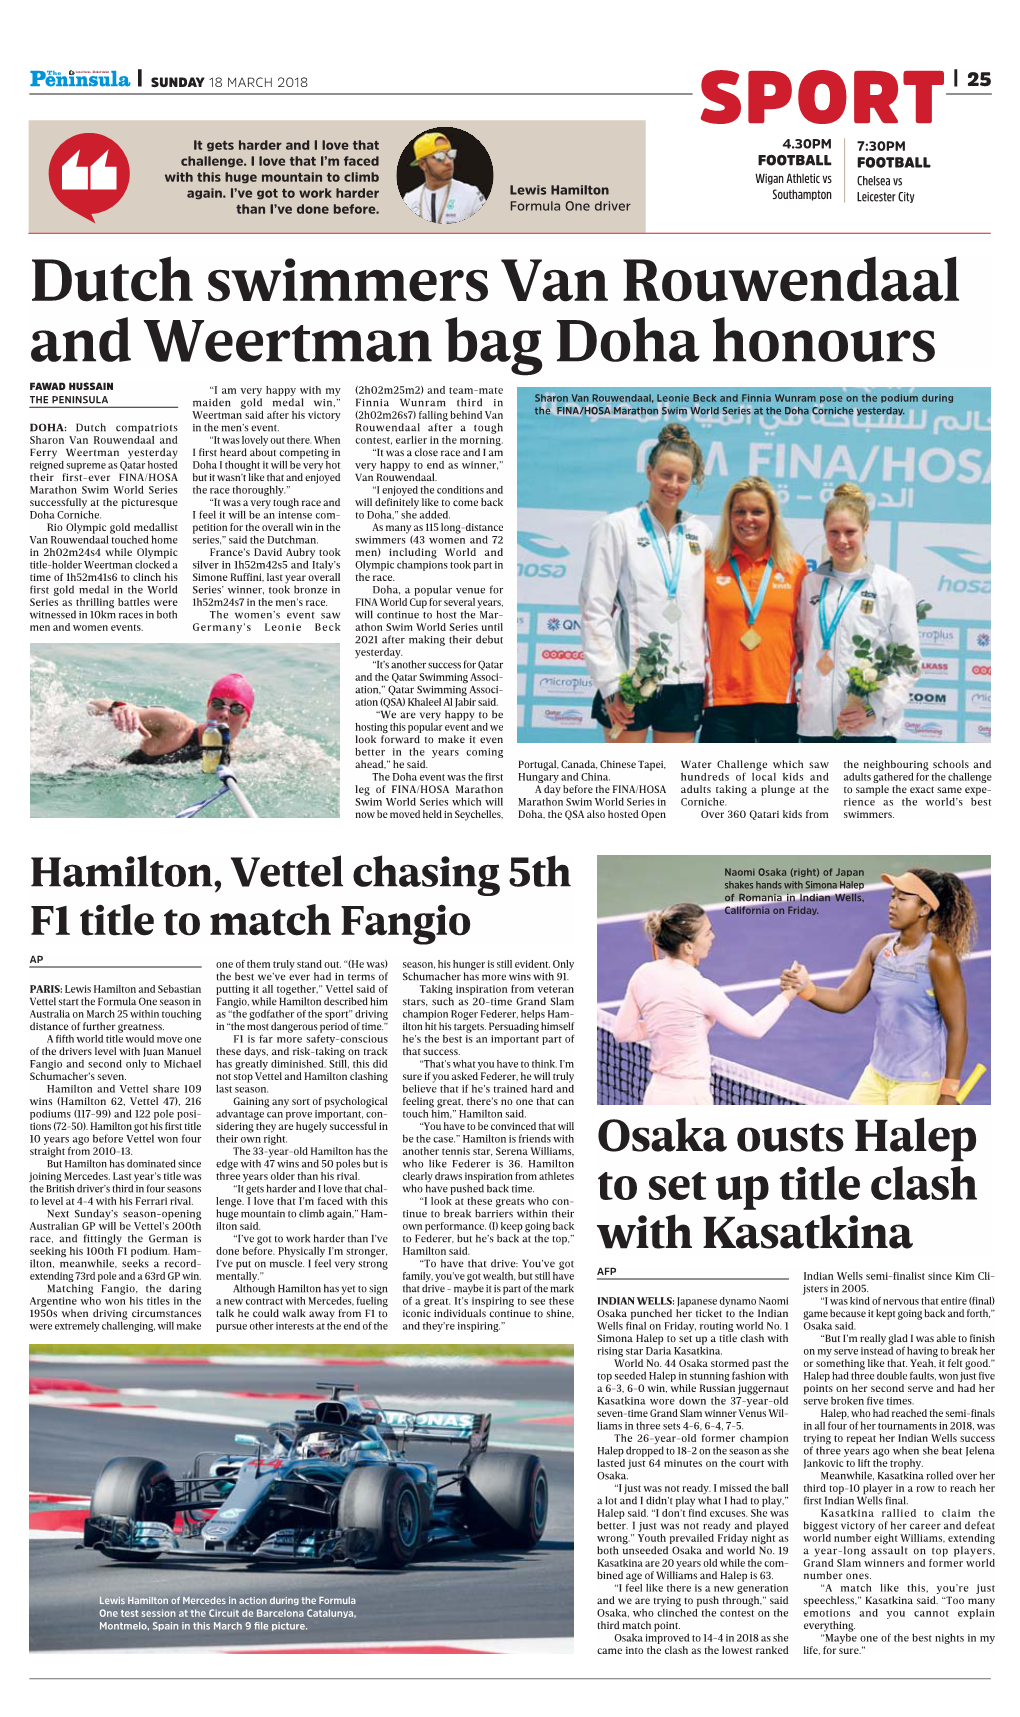 Dutch Swimmers Van Rouwendaal and Weertman Bag Doha Honours